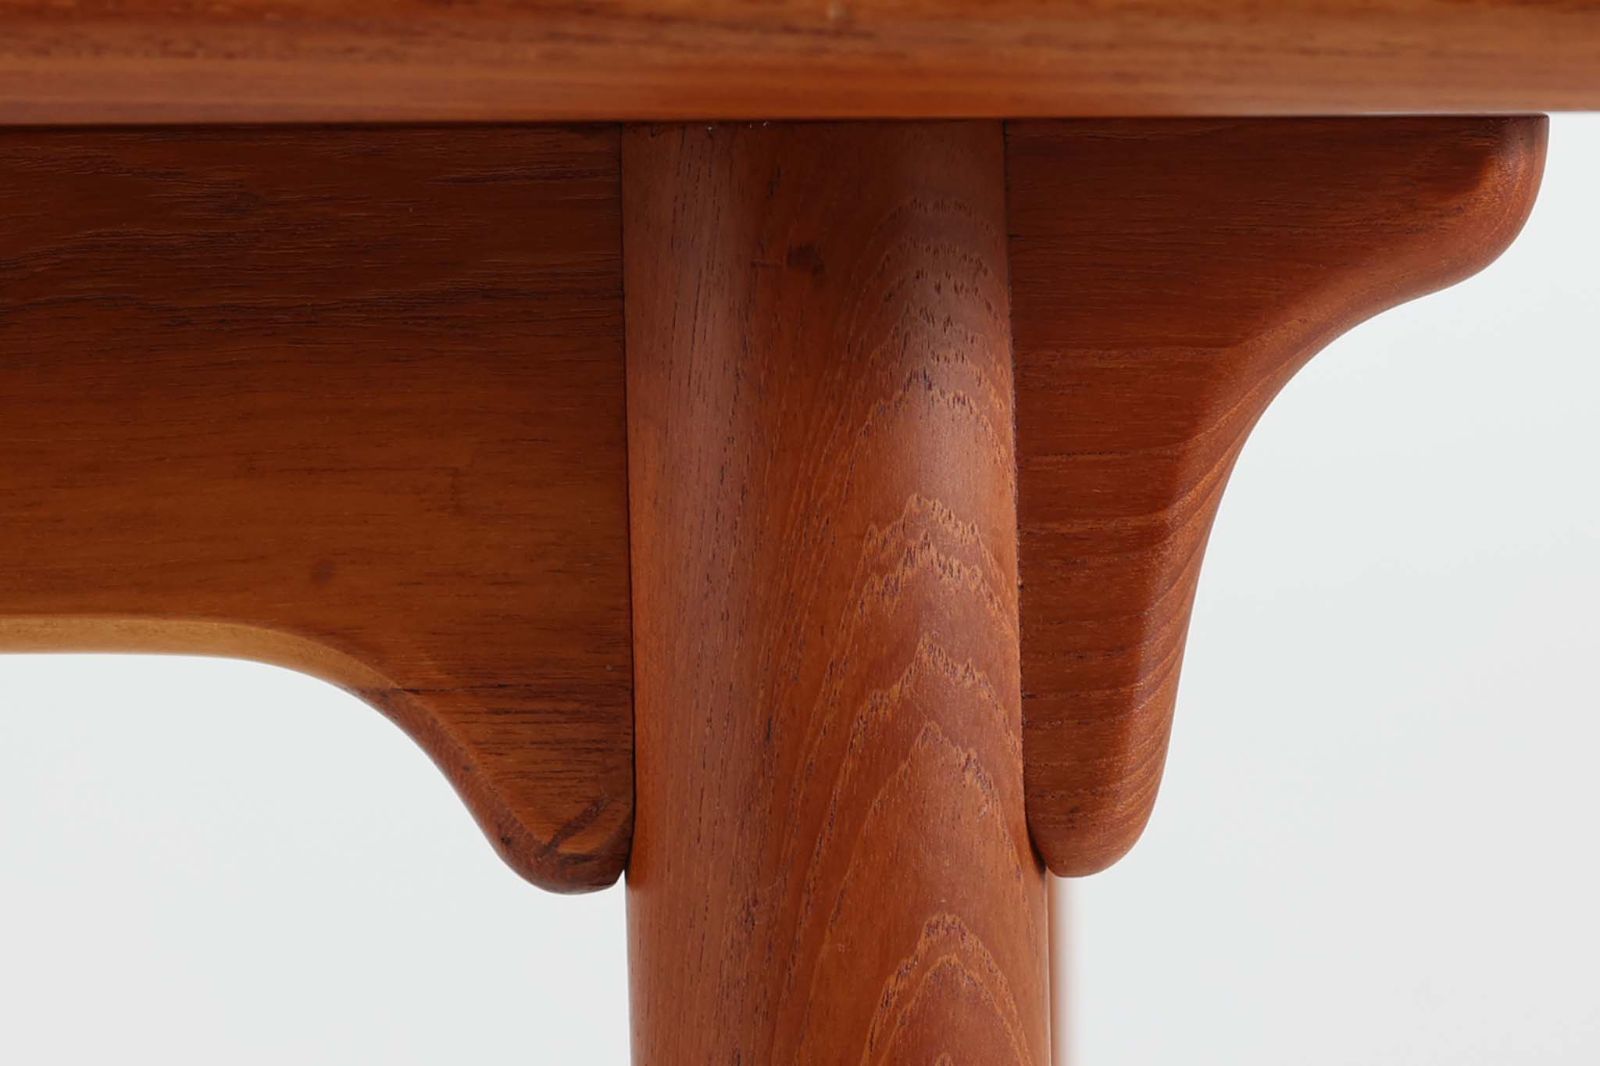 Omann Jun(オーマン・ユン) エクステンションダイニングテーブル 幅 135cm チーク材 北欧家具ビンテージ/DK14238 - メルカリ